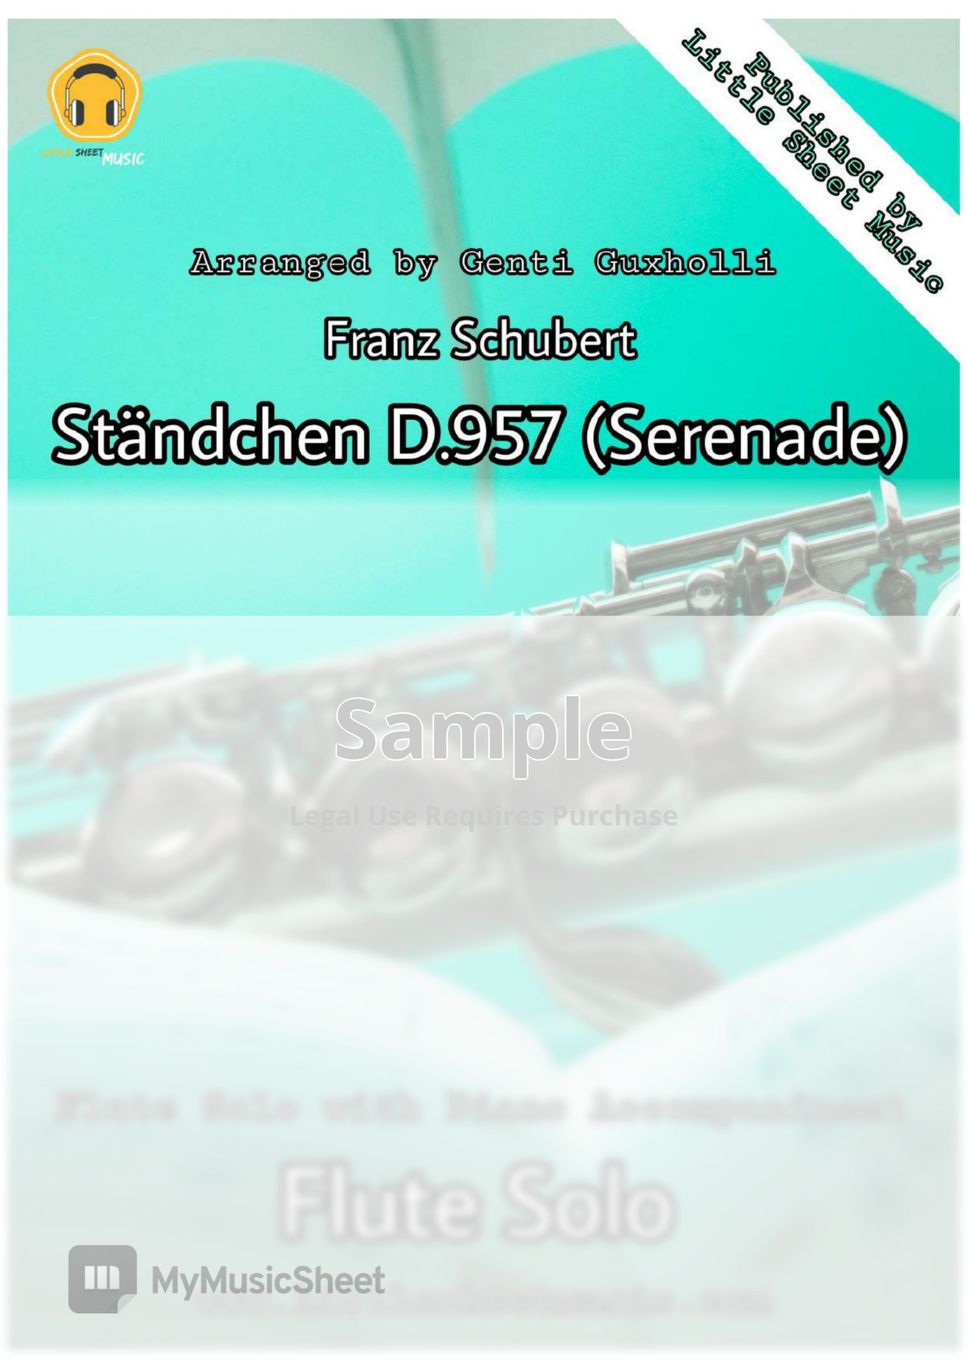 Franz Schubert - Ständchen (Serenade) from (Schwanengesang D.957) (Flute Solo with Piano Accompaniment) by Genti Guxholli